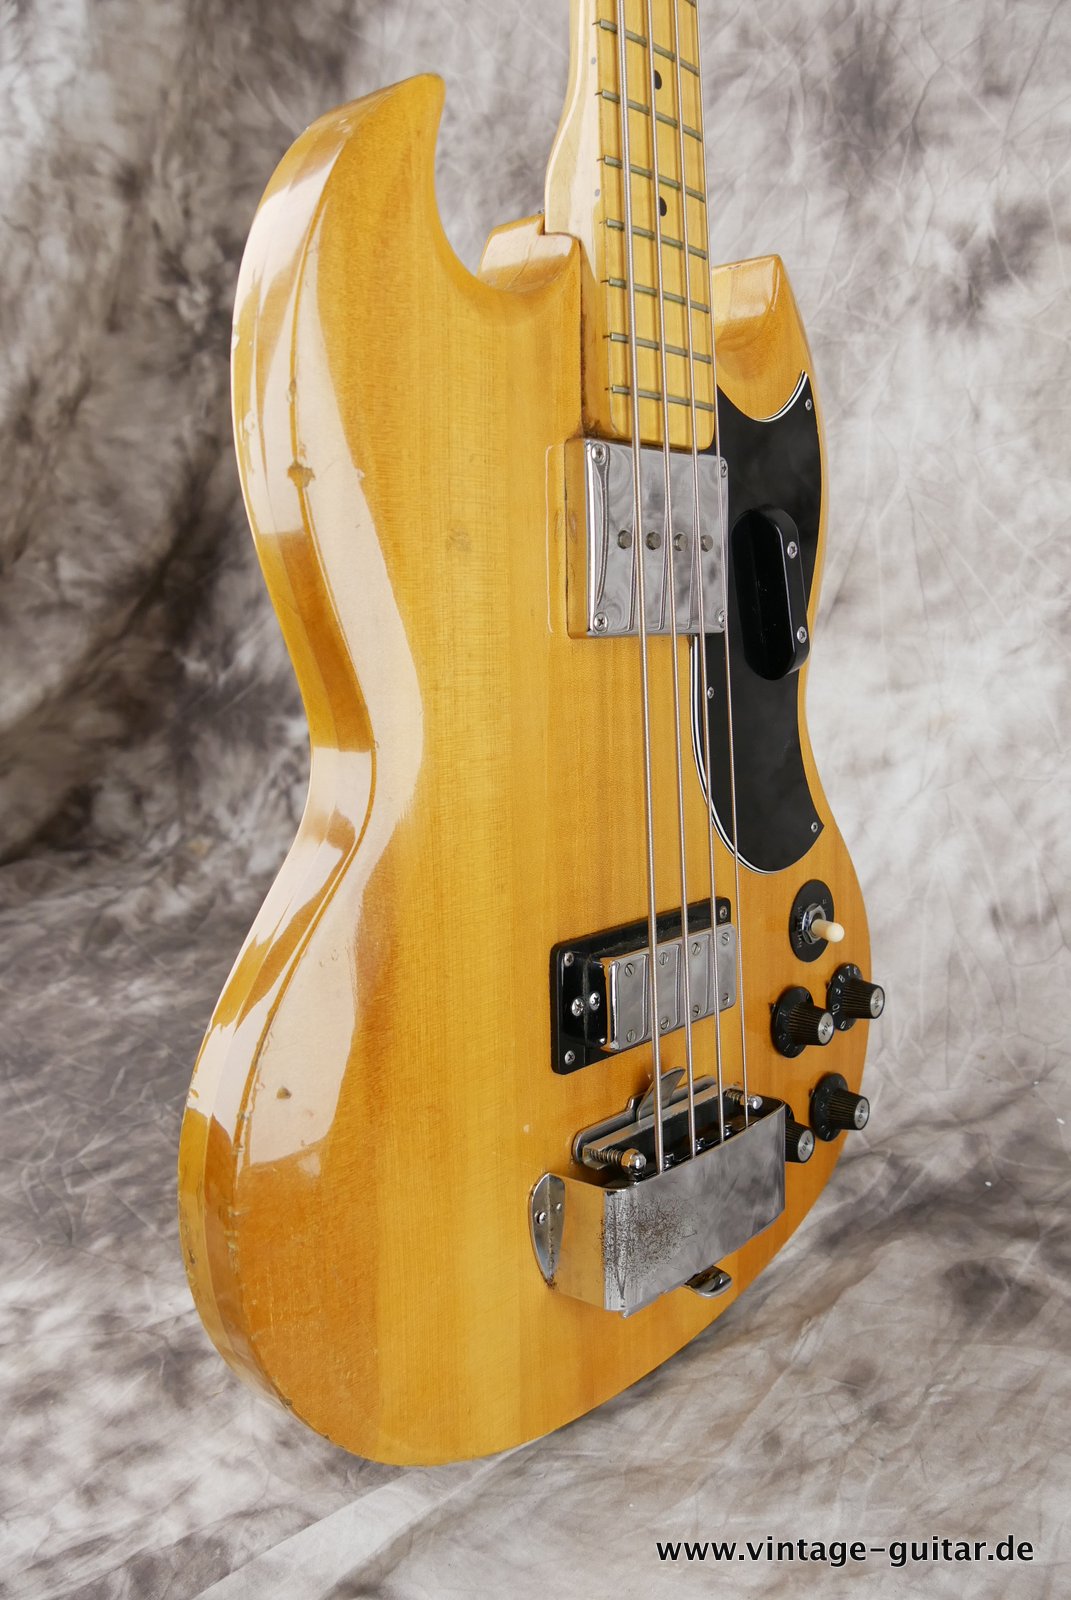 Ibanez-Model-2452-Bass-1975-005.JPG